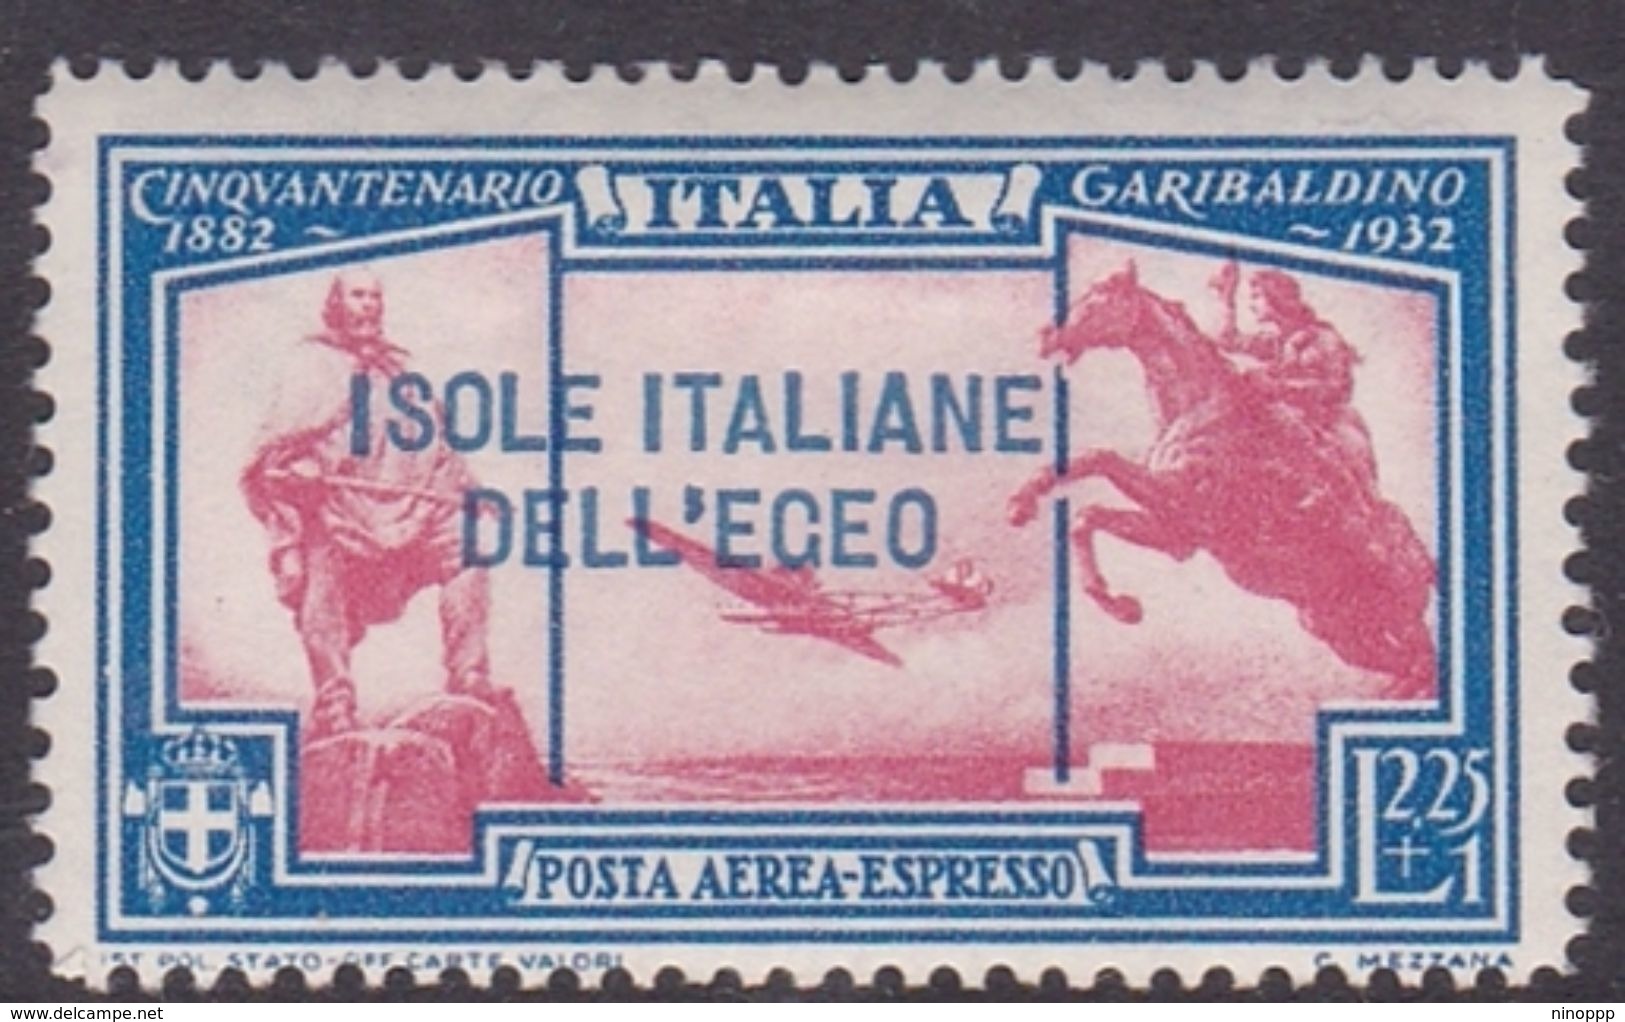 Italy-Colonies And Territories-Aegean General Issue-Rodi A19 1932 Air Mail Garibaldi 2,25 Lira+1 Lira Air Express MH - General Issues